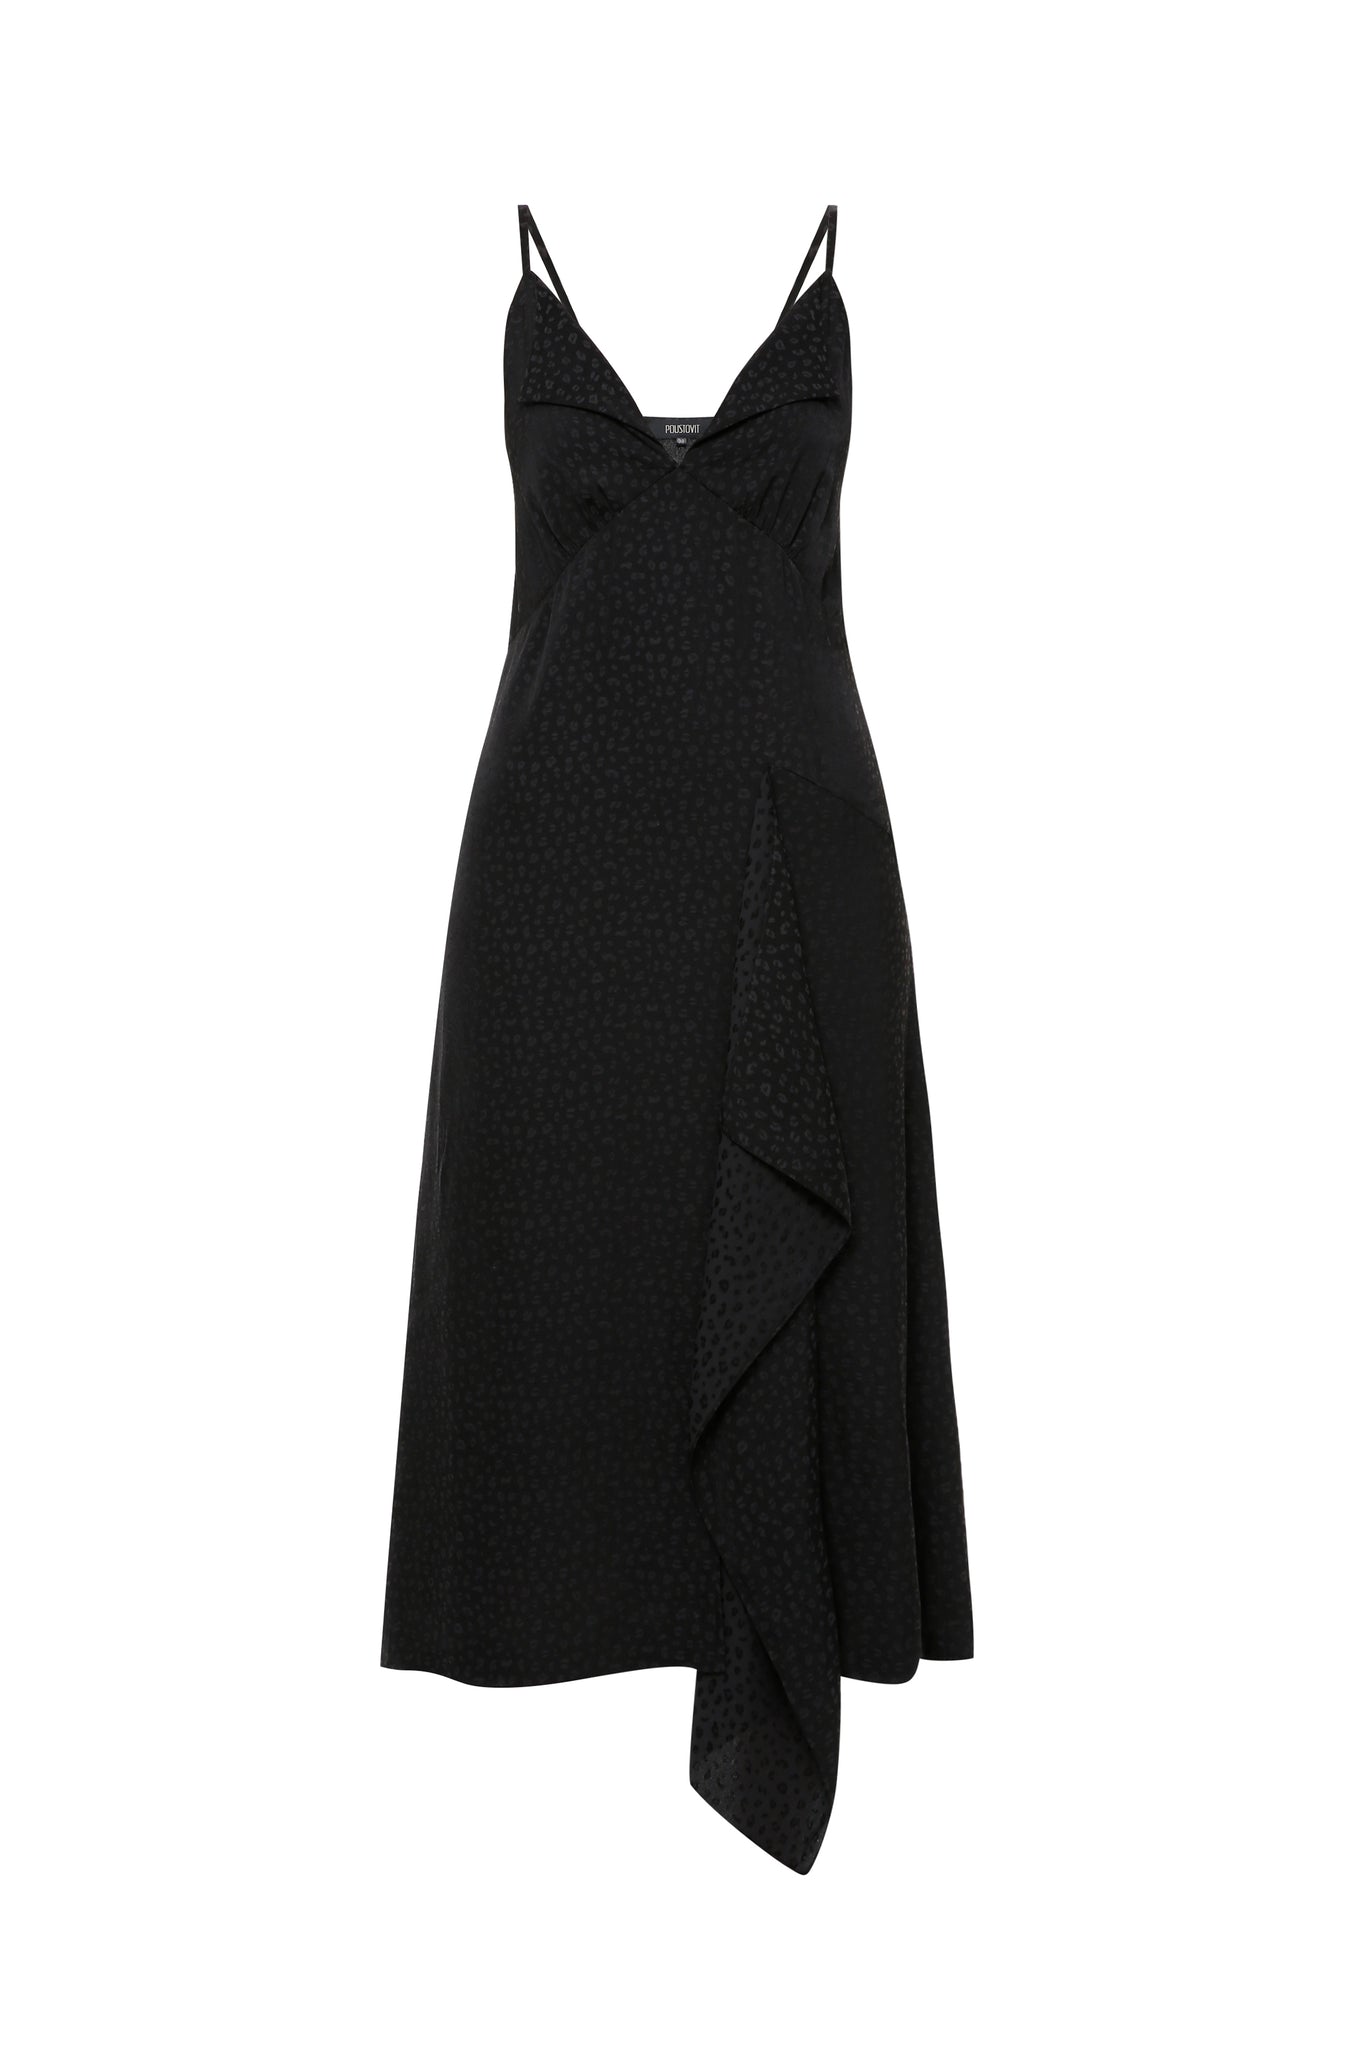 Black jacquard slip-dress with an asymmetrical flounce